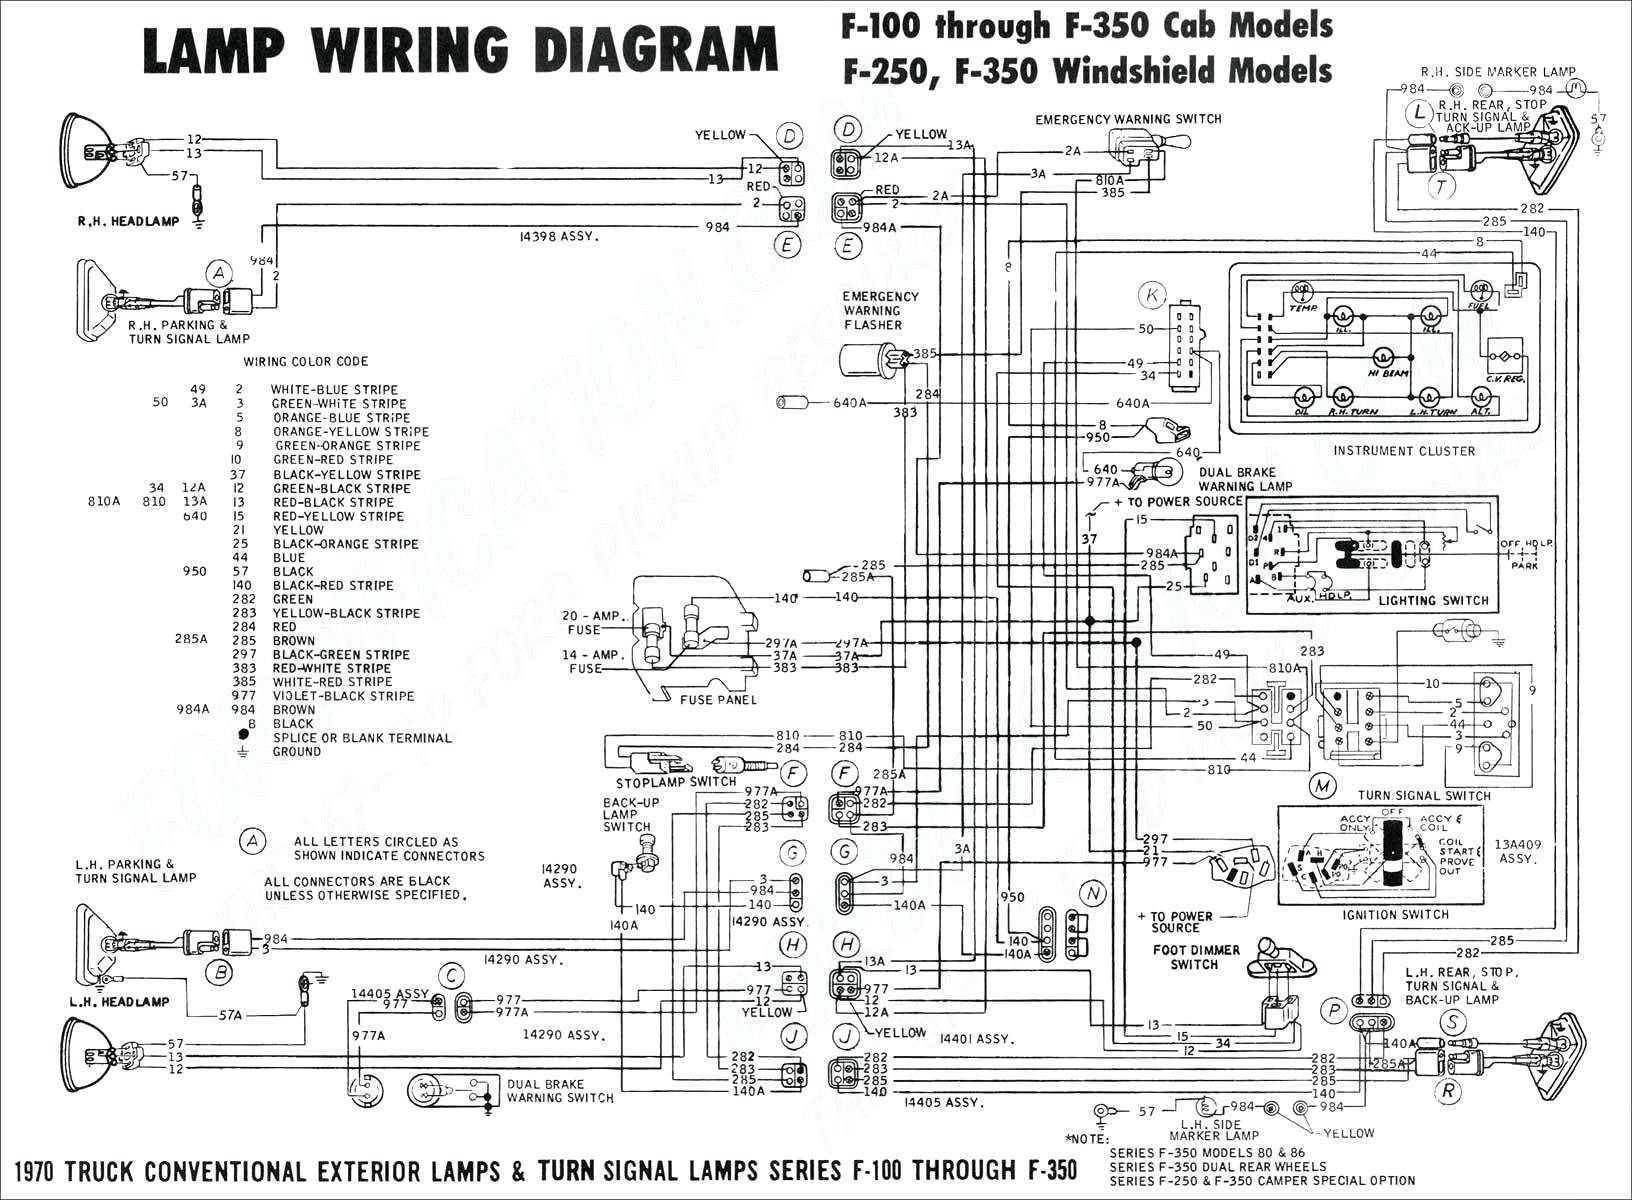 Stop Turn Tail Light Wiring Diagram Beautiful 1979 ford F150 Tail Light Wiring Diagram Electrical Website